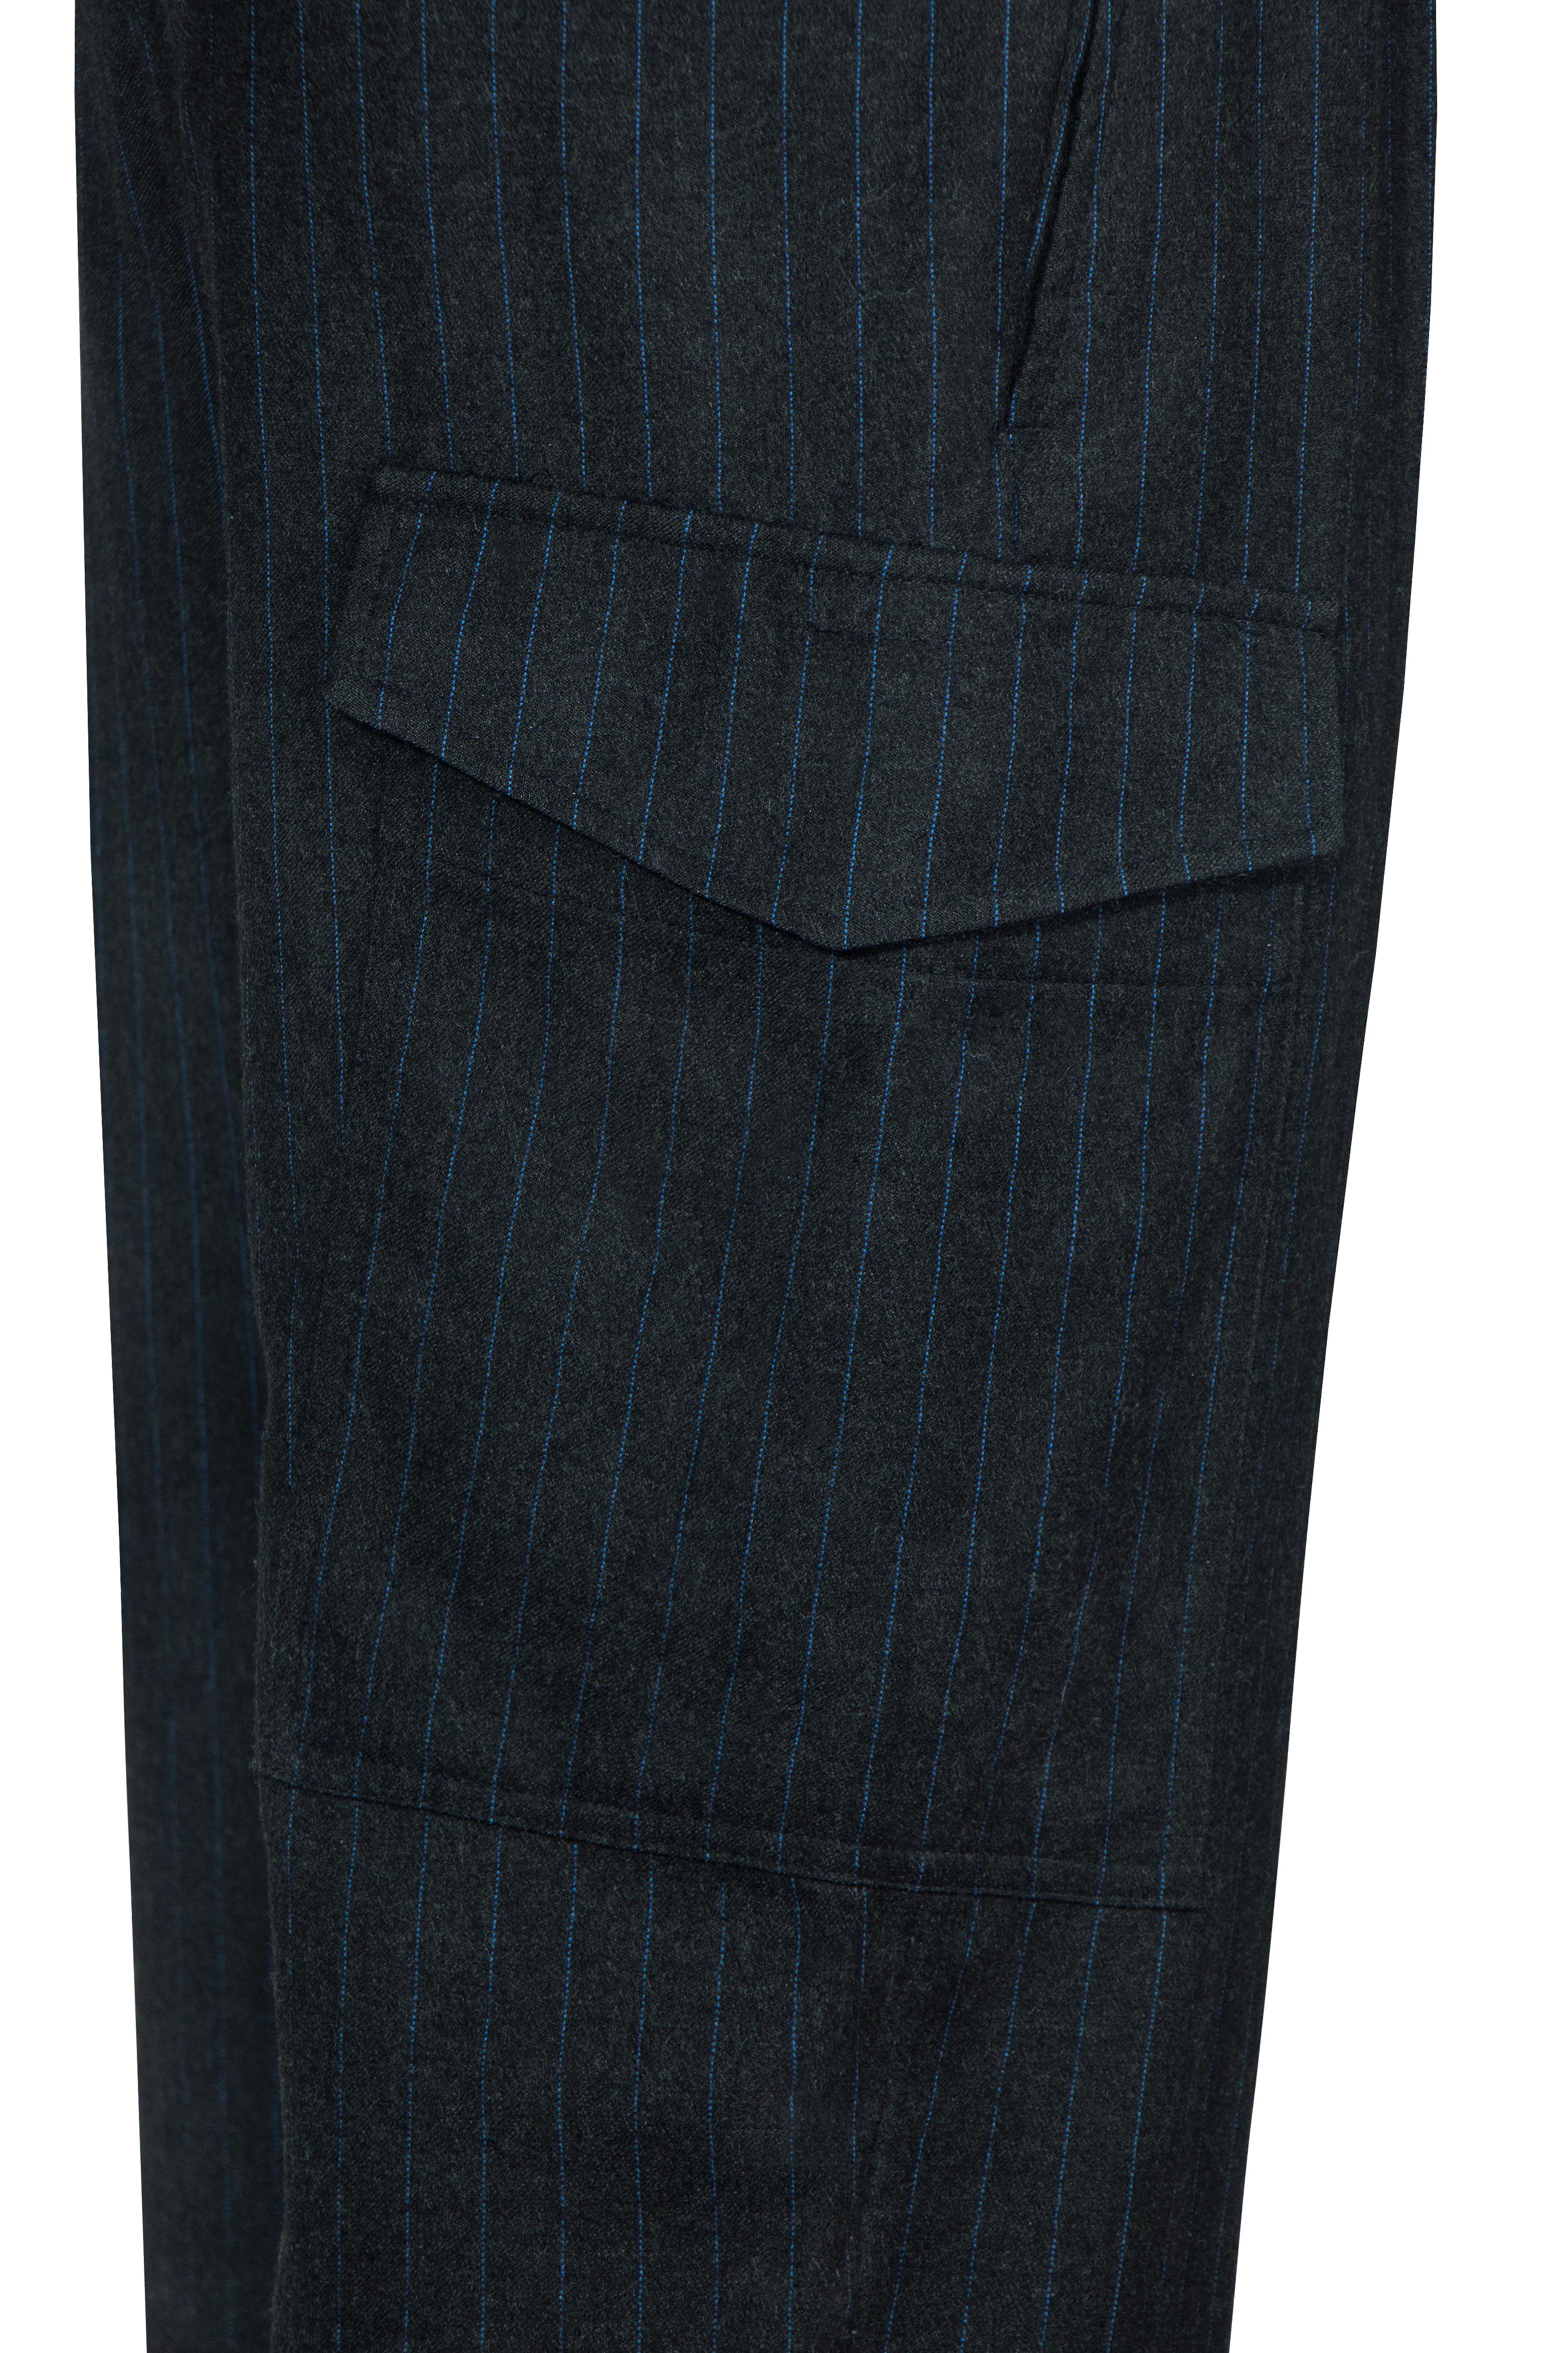 Alexander McQueen men's pinstripe cargo trousers, fw 1997 For Sale 2